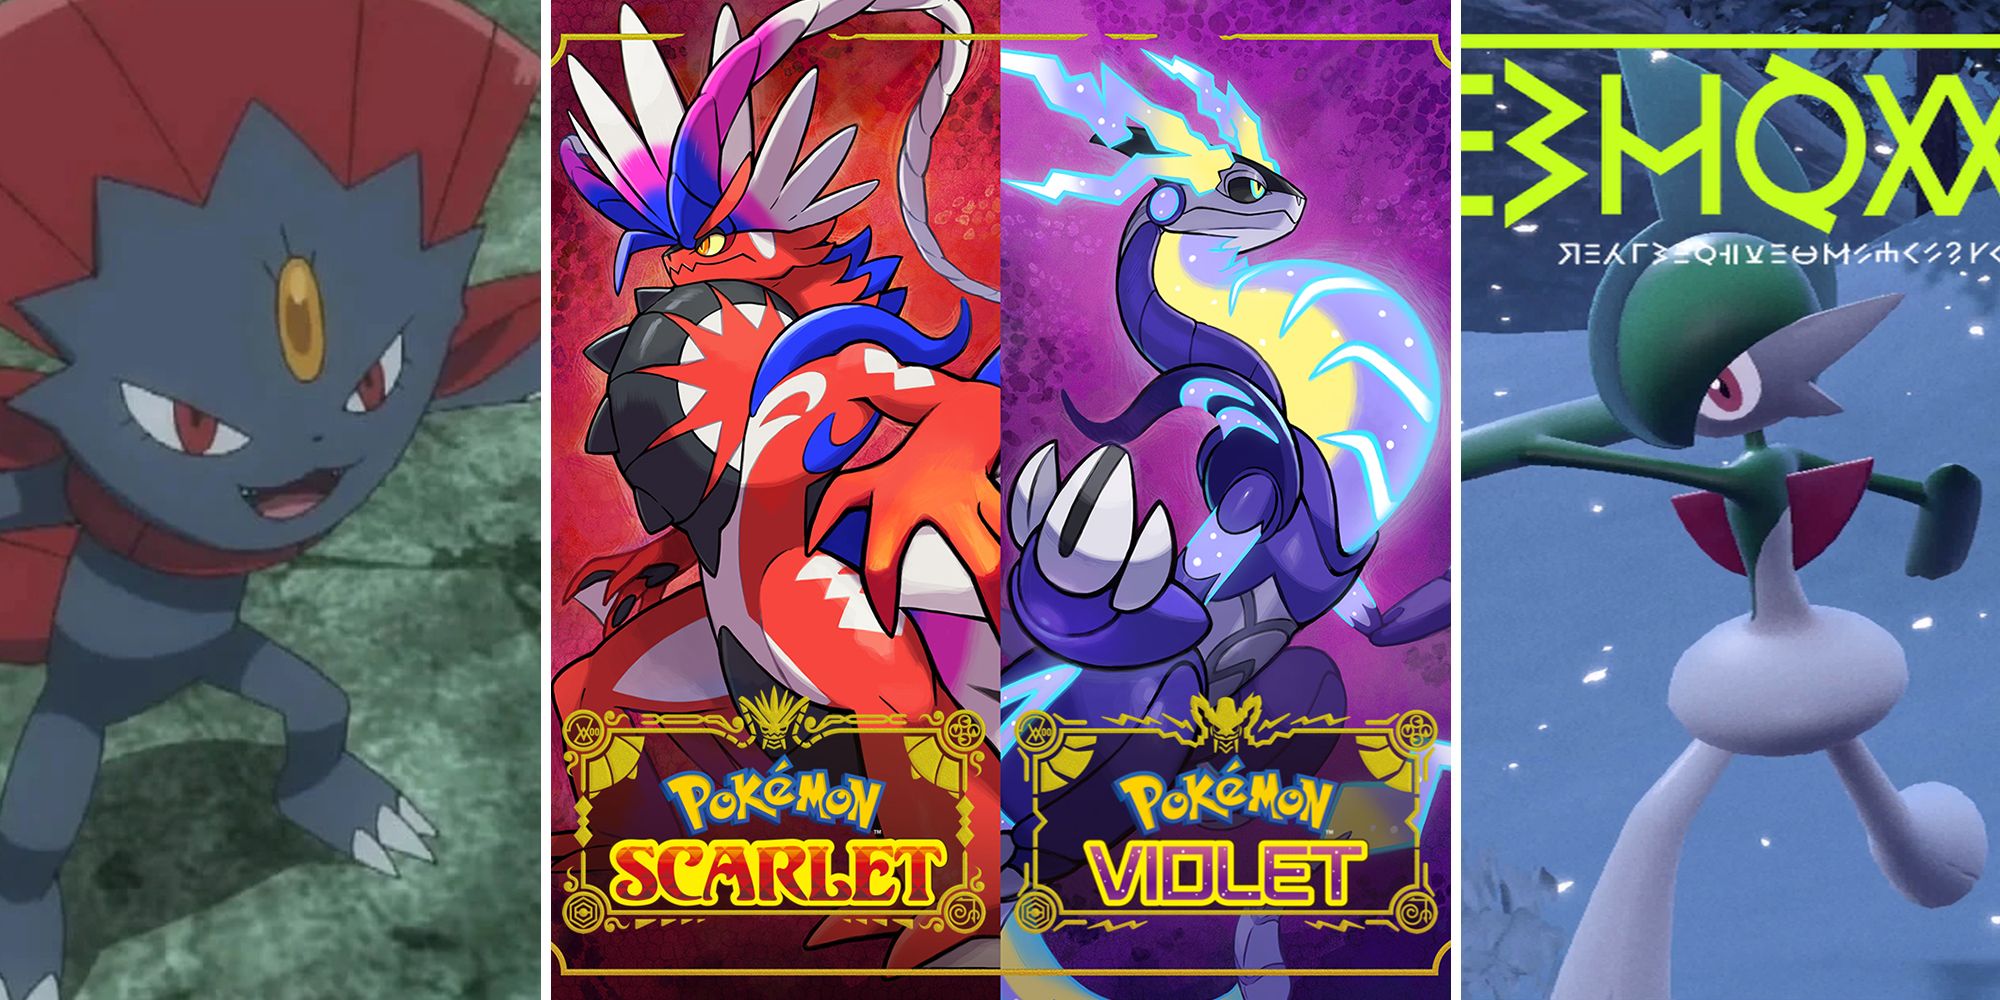 The Best Pokédex Pictures In Pokémon Scarlet & Violet